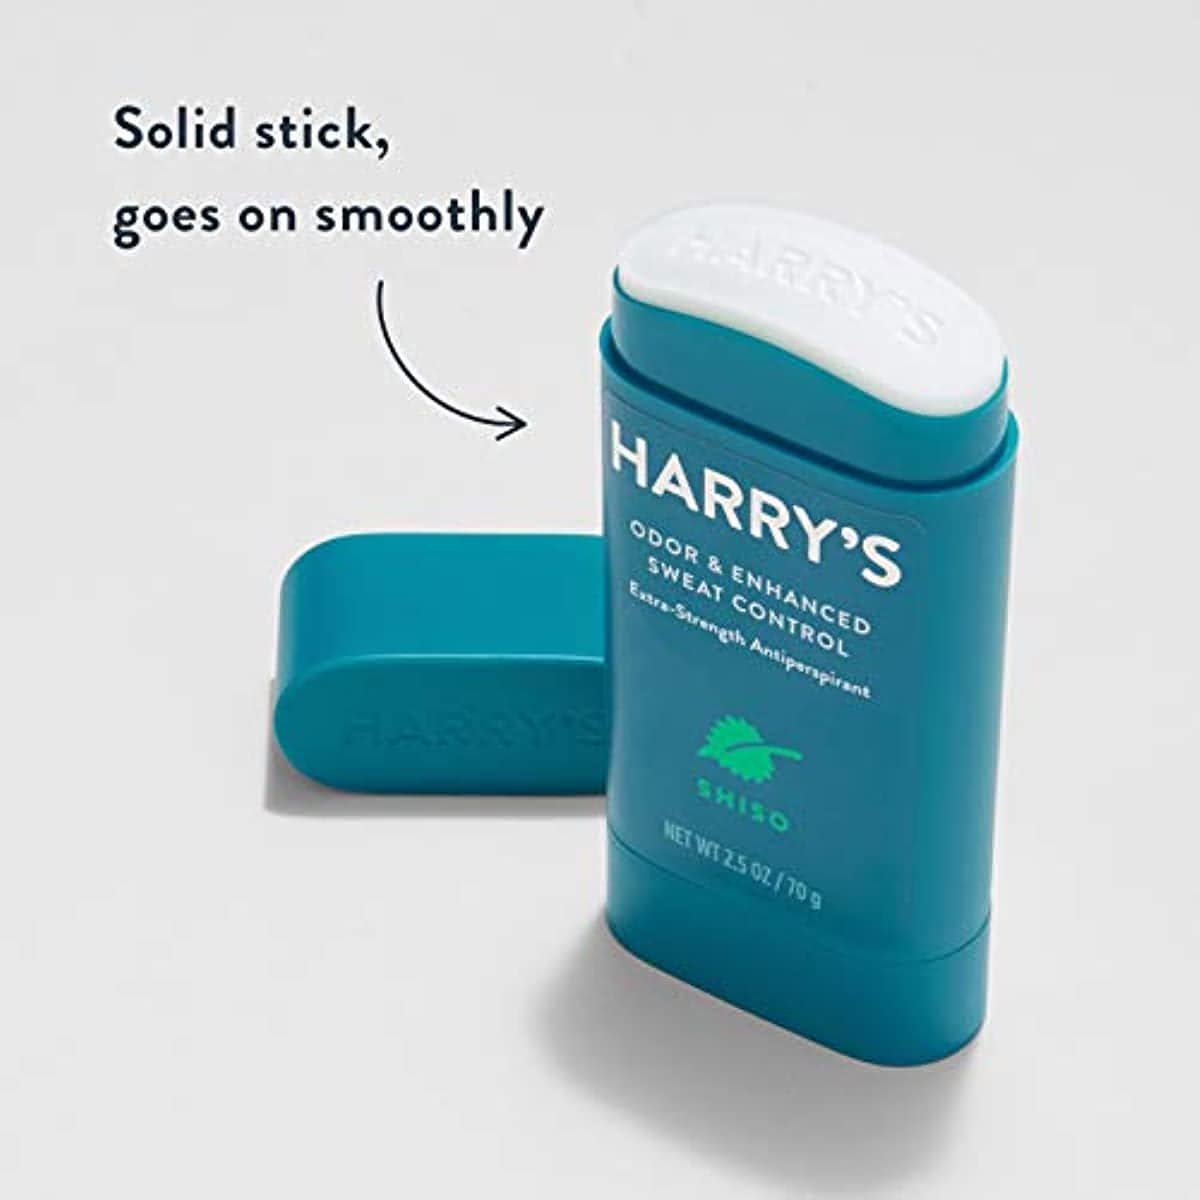 Harry's Extra-Strength Antiperspirant - Odor & Enhanced Sweat Control Antiperspirant for Men